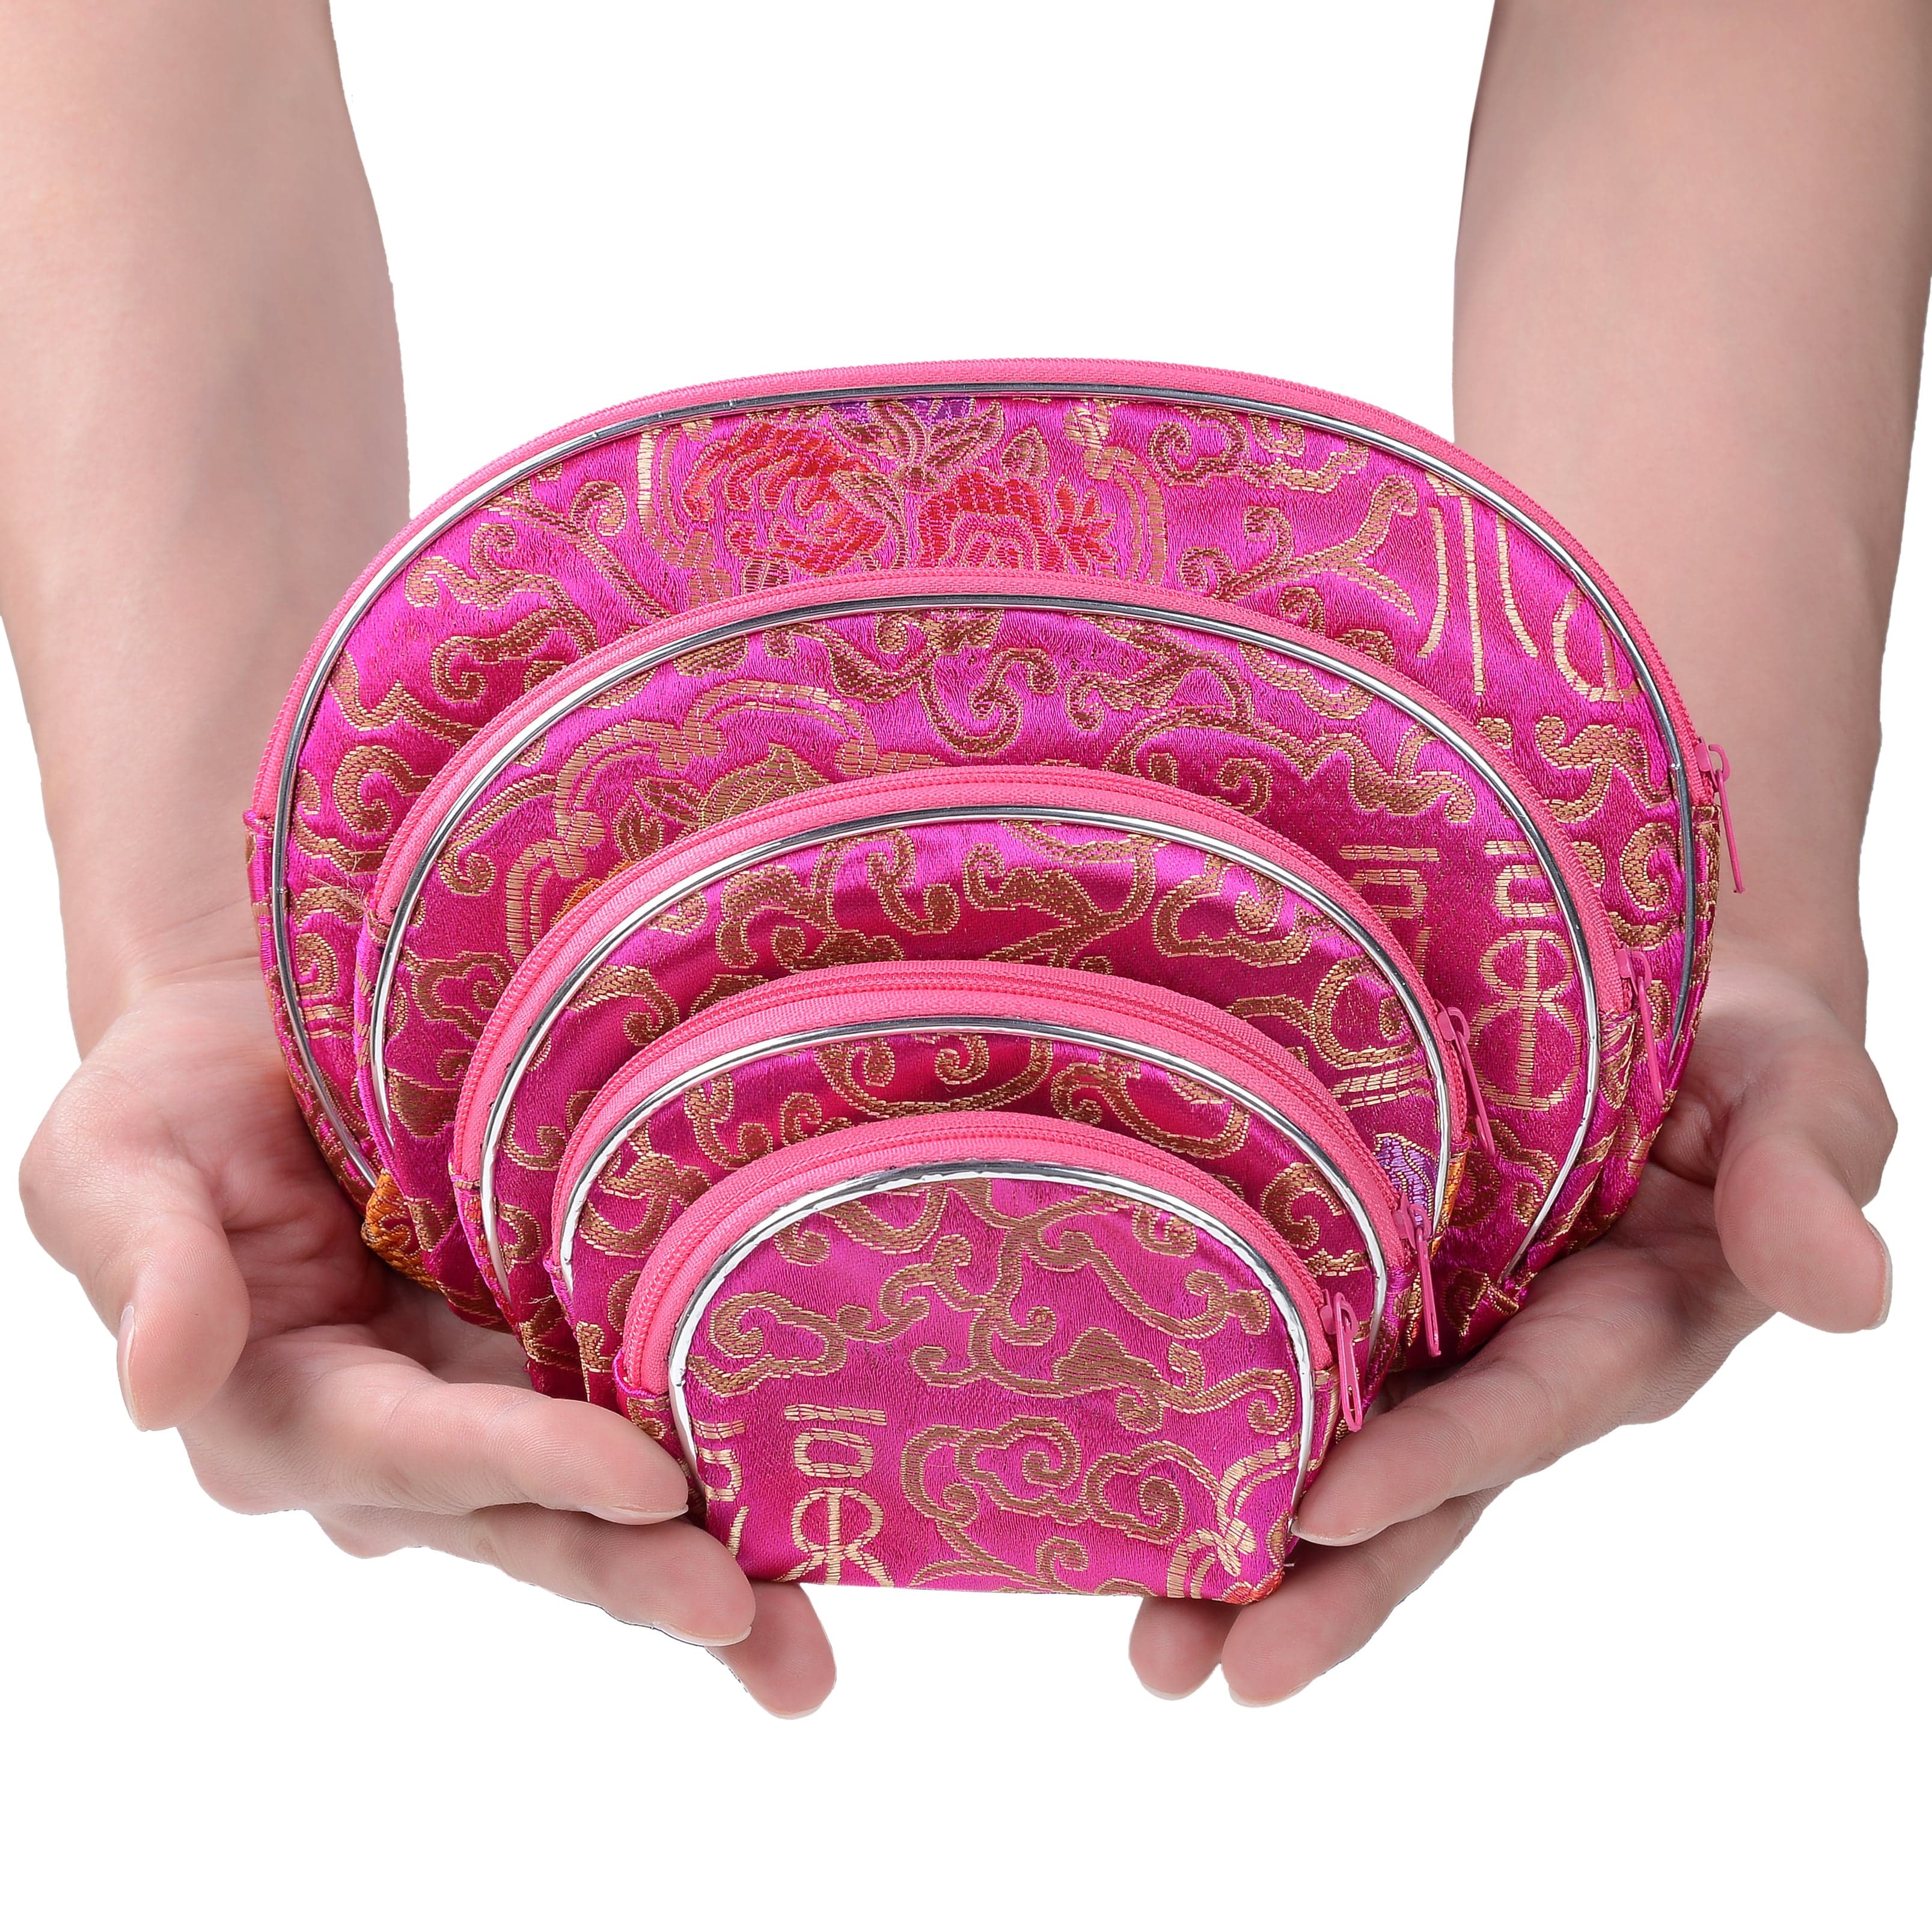 Kalifano JEWELRY POUCHES Pink Silk Pouch - 5 piece set POUCH5-PK